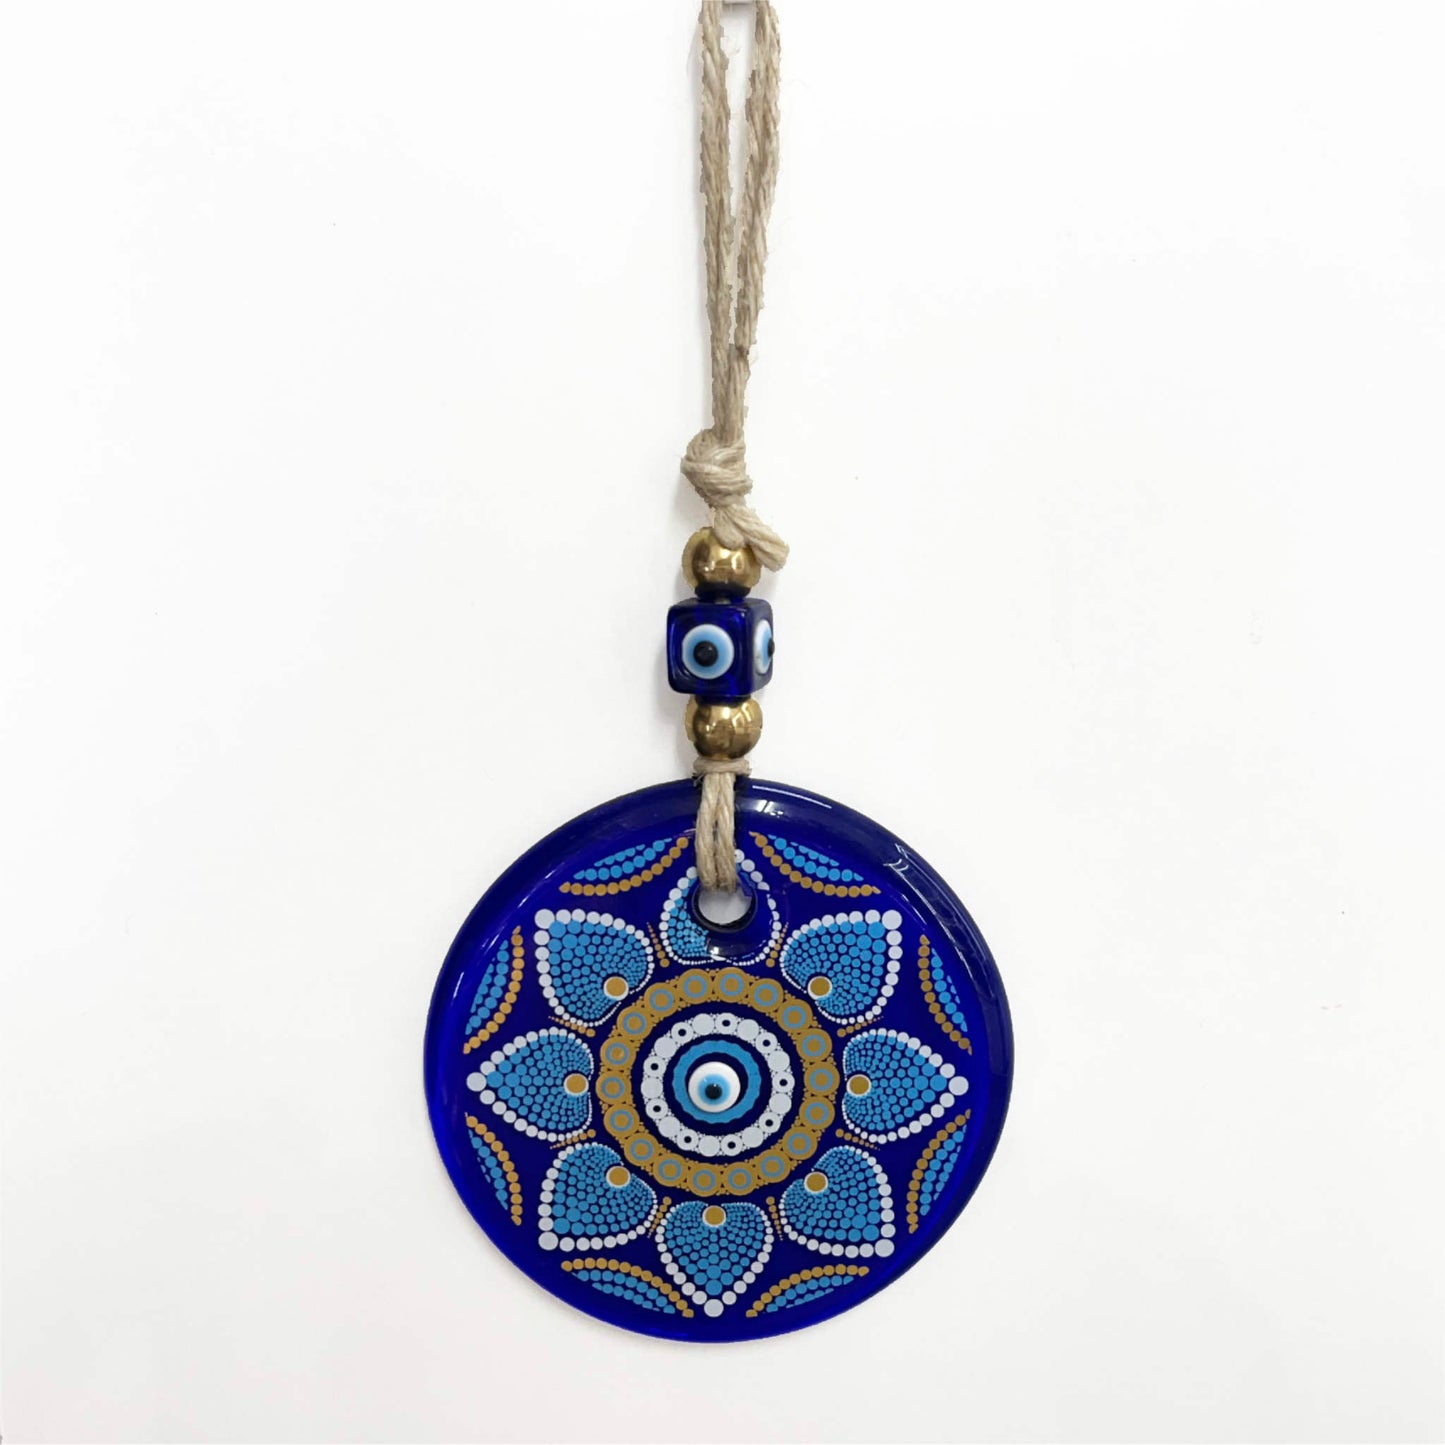 Amuleto ojo turco de cristal y de pared flor1 